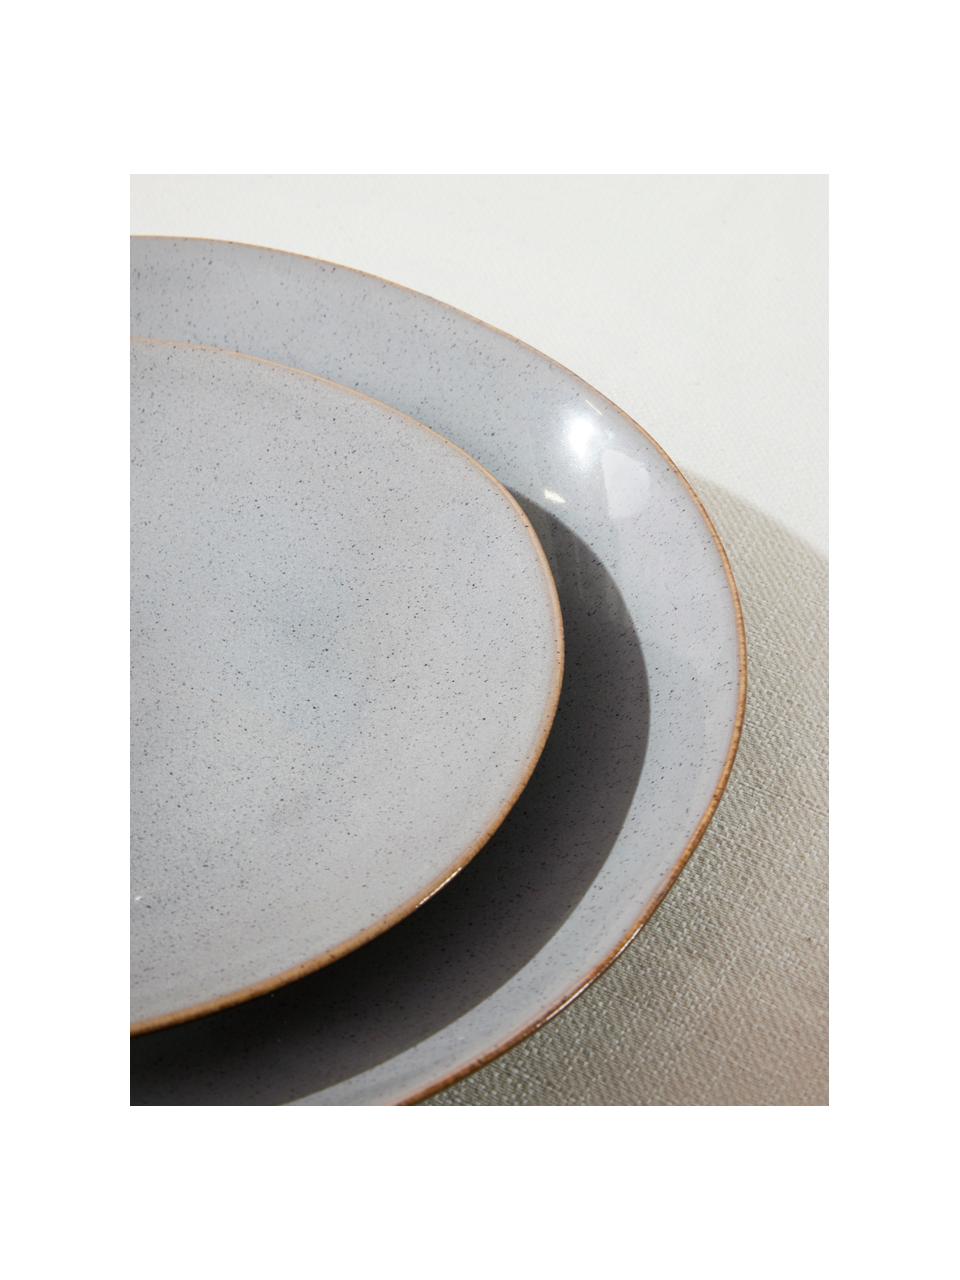 Dinerbord Hali met reactief glazuur, 4 stuks, Keramiek, geglazuurd, Blauwgrijs met bruine rand, Ø 27 x H 3 cm